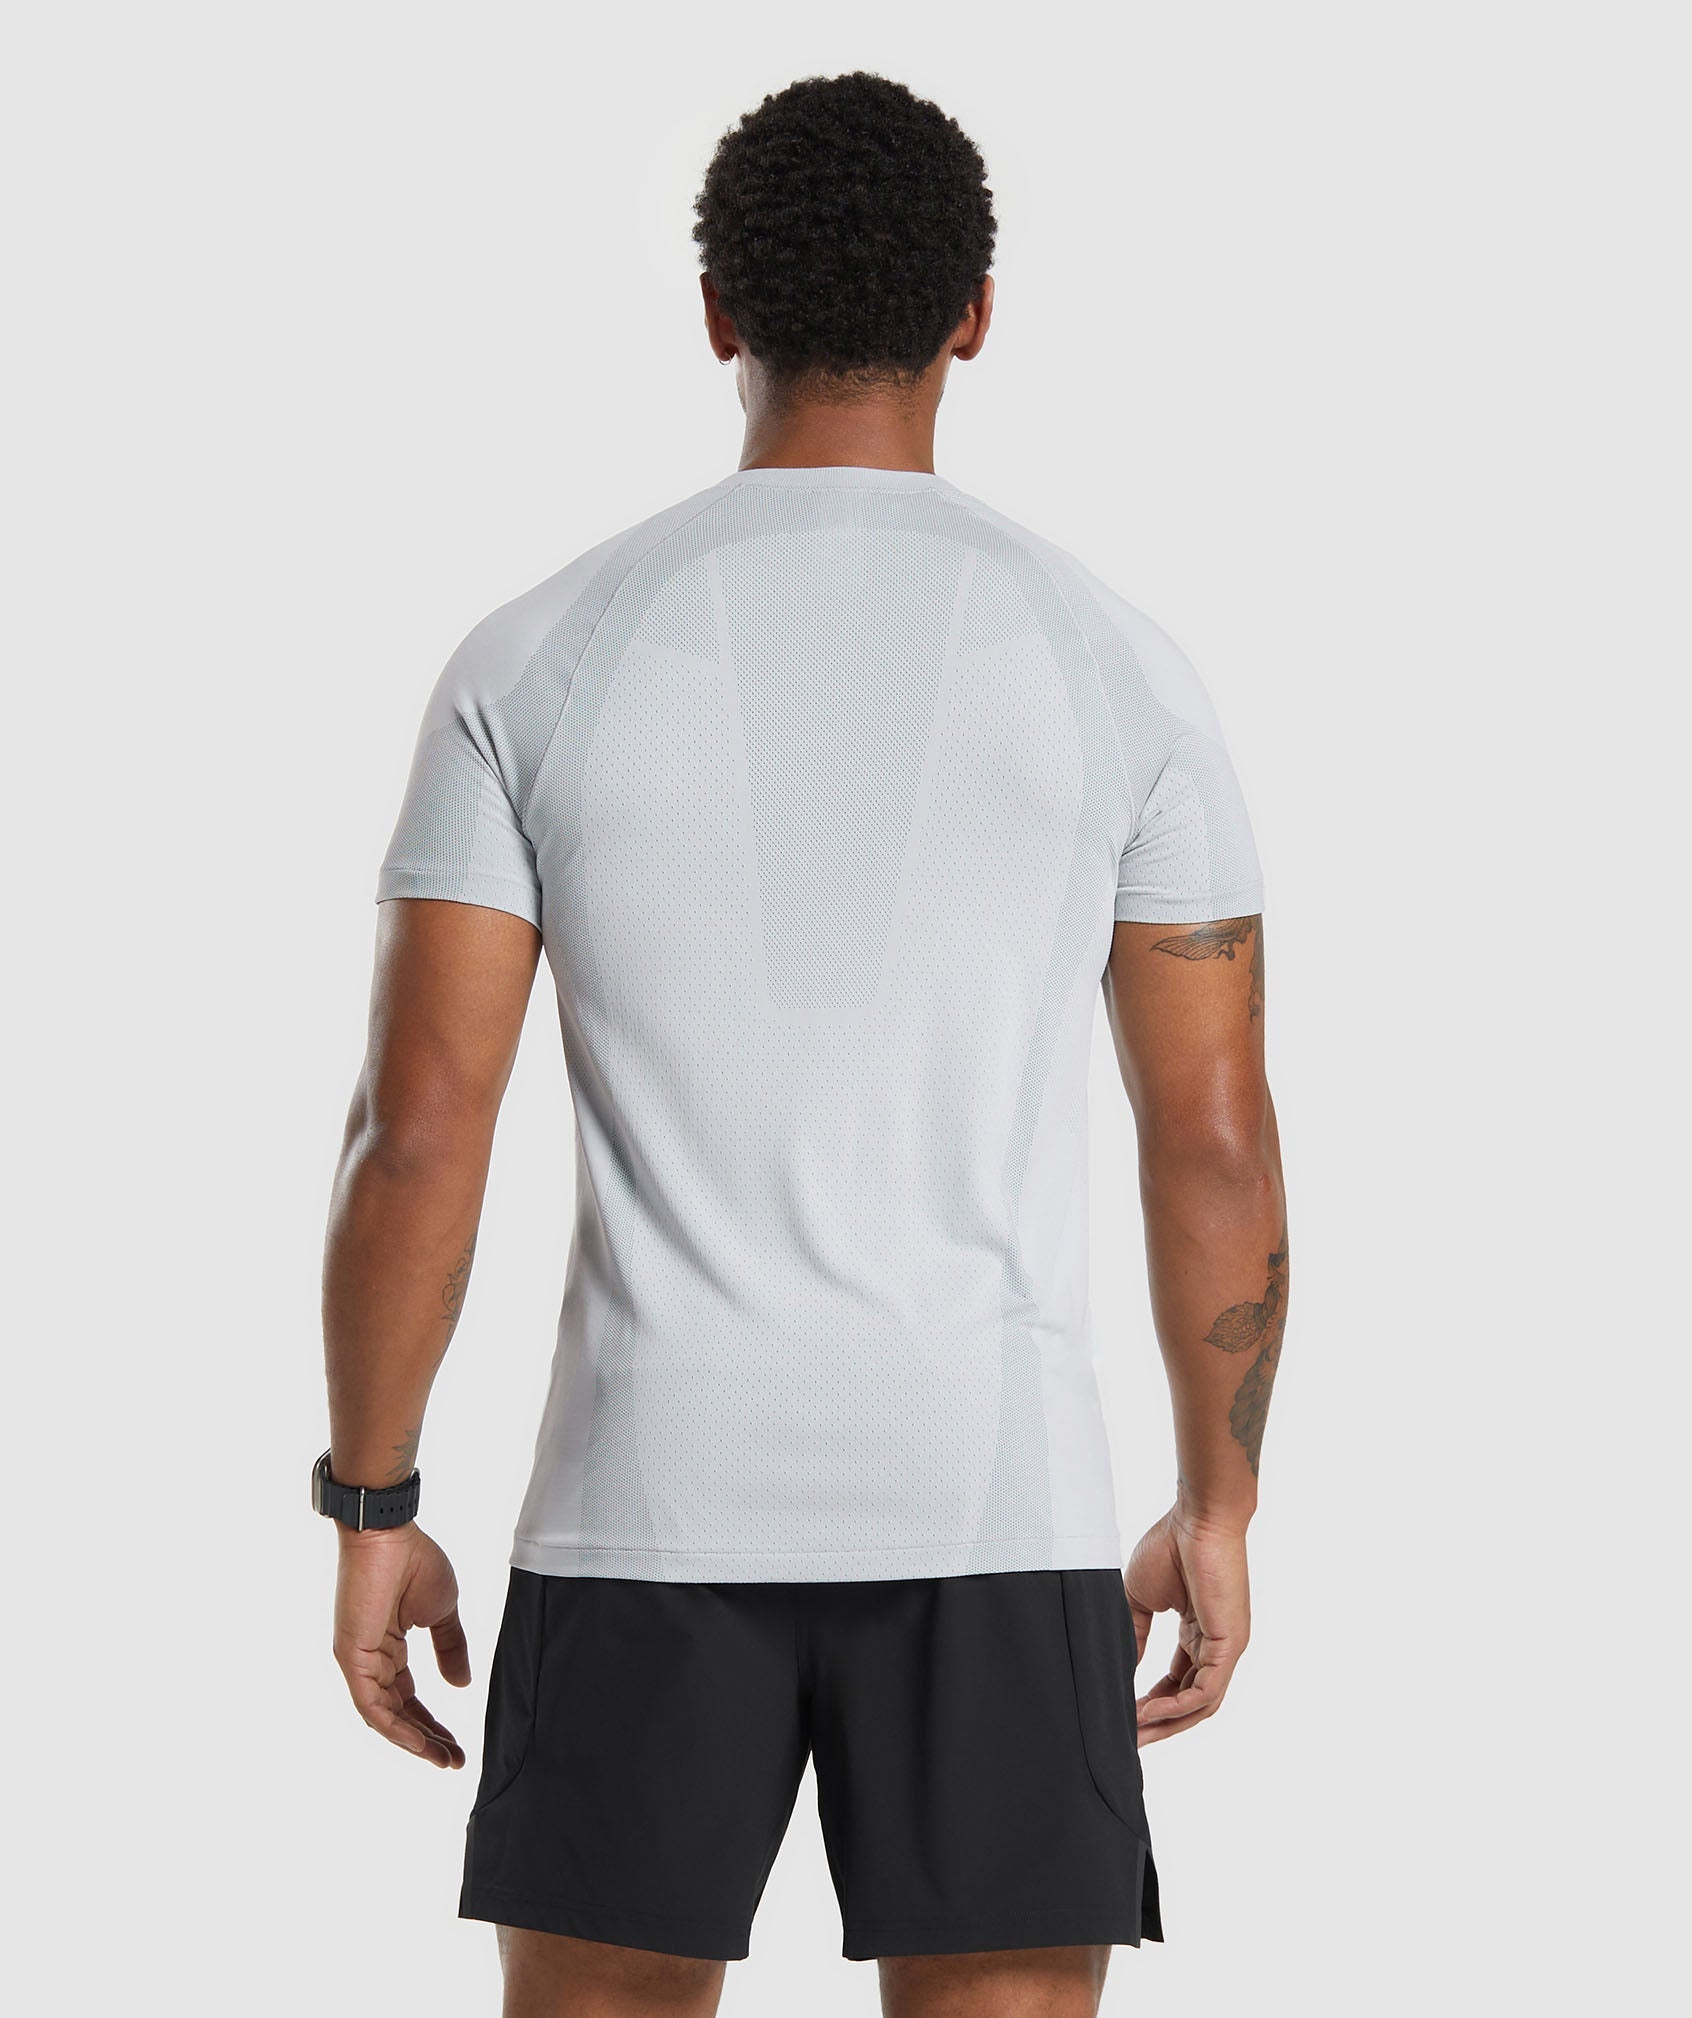 Apex Seamless T-Shirt in Light Grey/Medium Grey - view 2